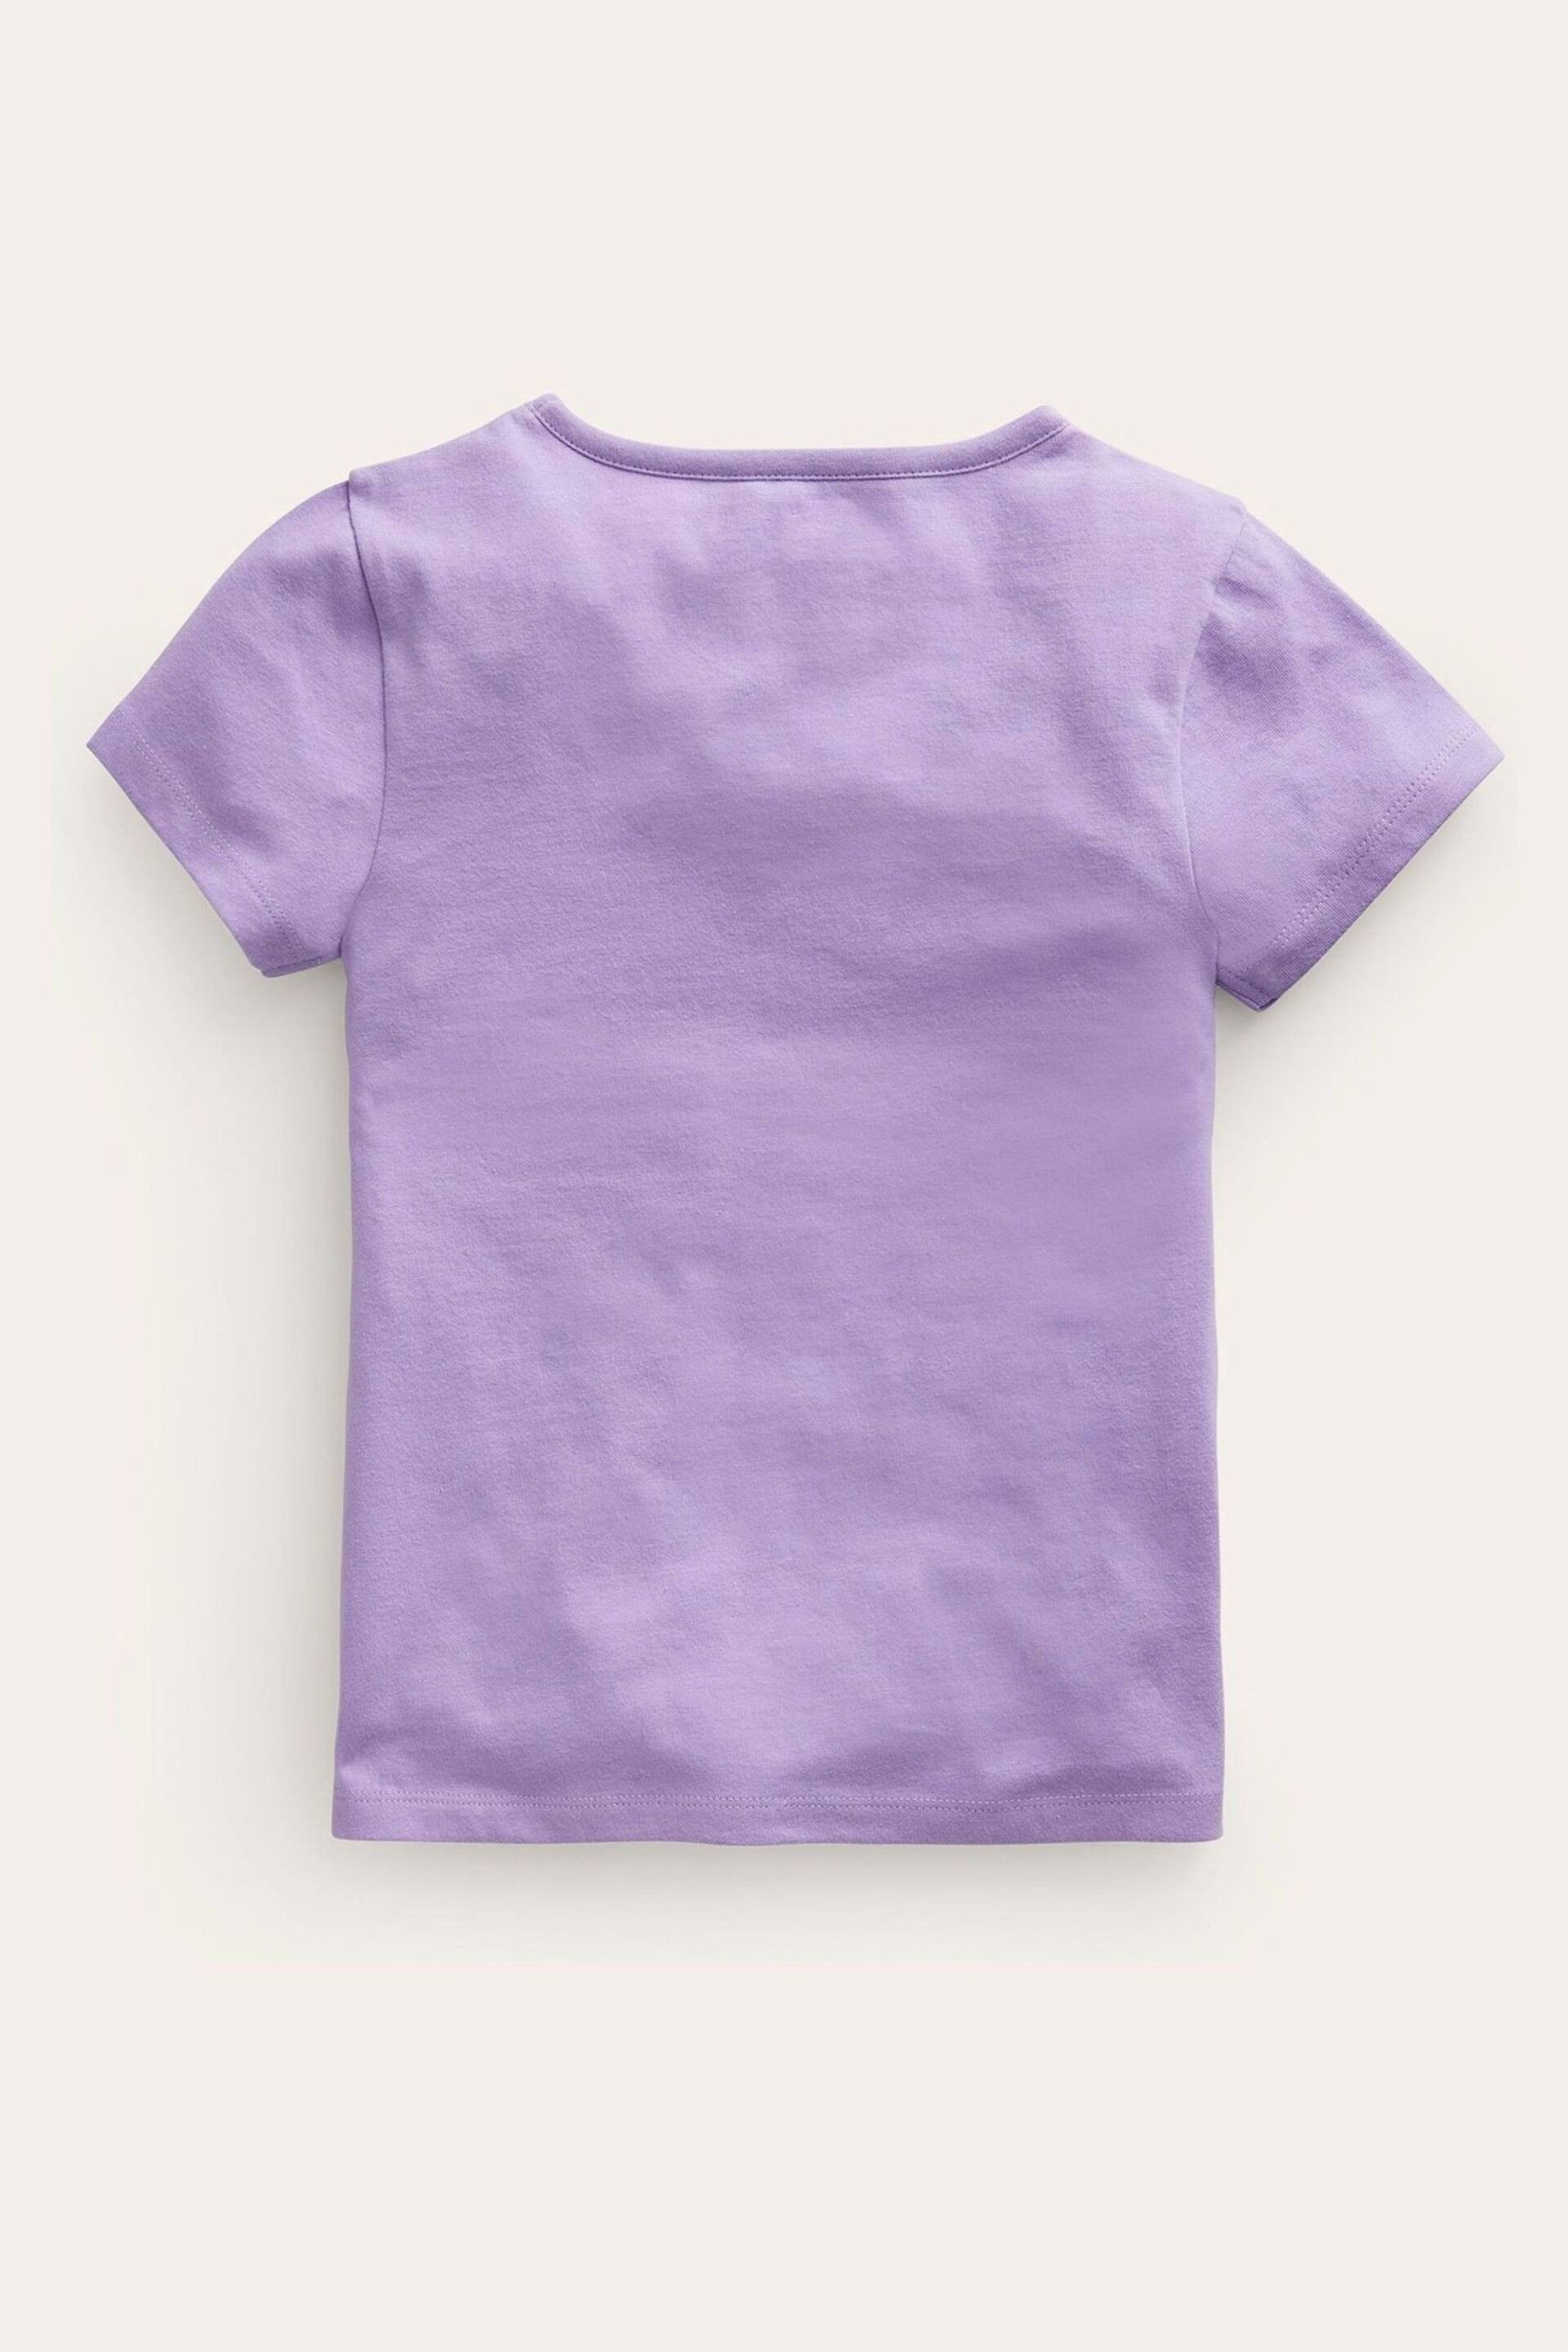 Boden Purple Superstitch Logo T-Shirt - Image 2 of 3